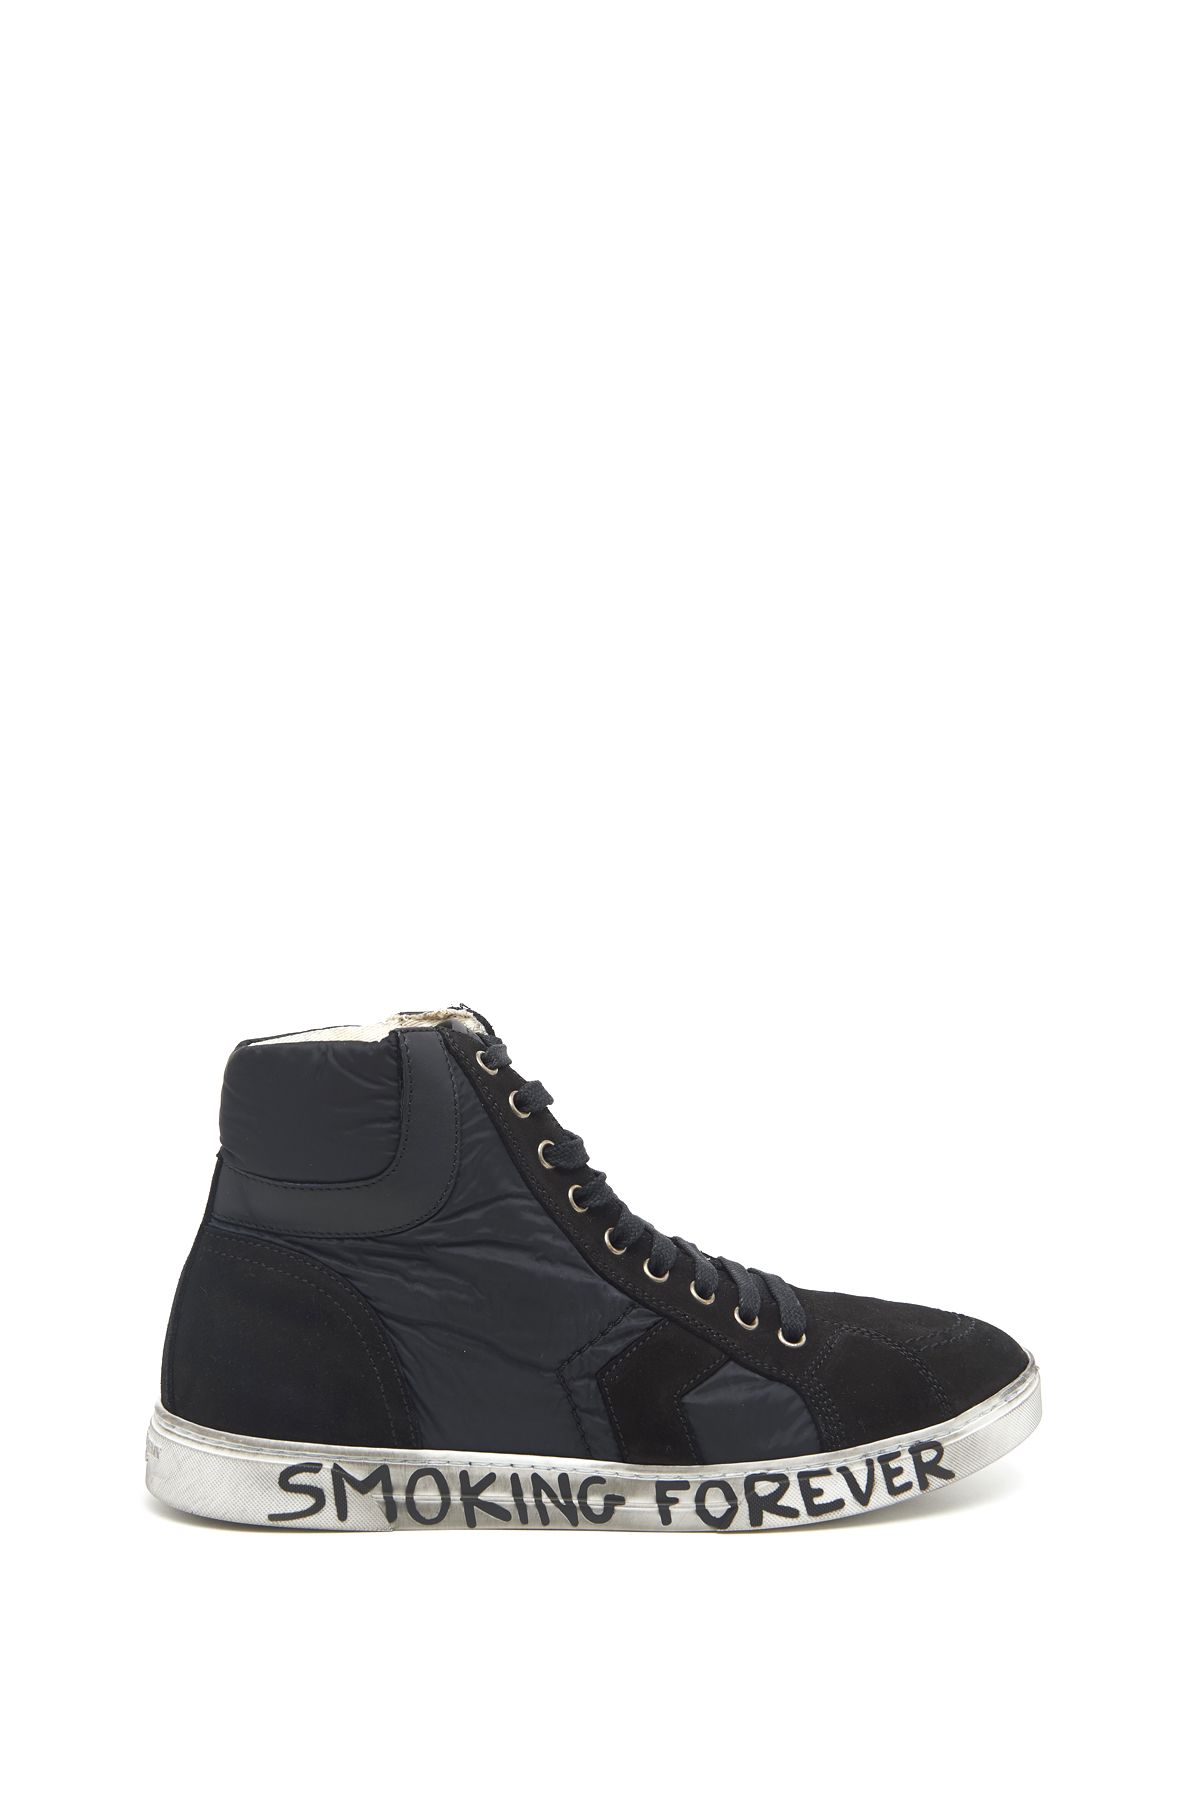 SAINT LAURENT Smoking Forever Hi-Top Sneakers in Black | ModeSens